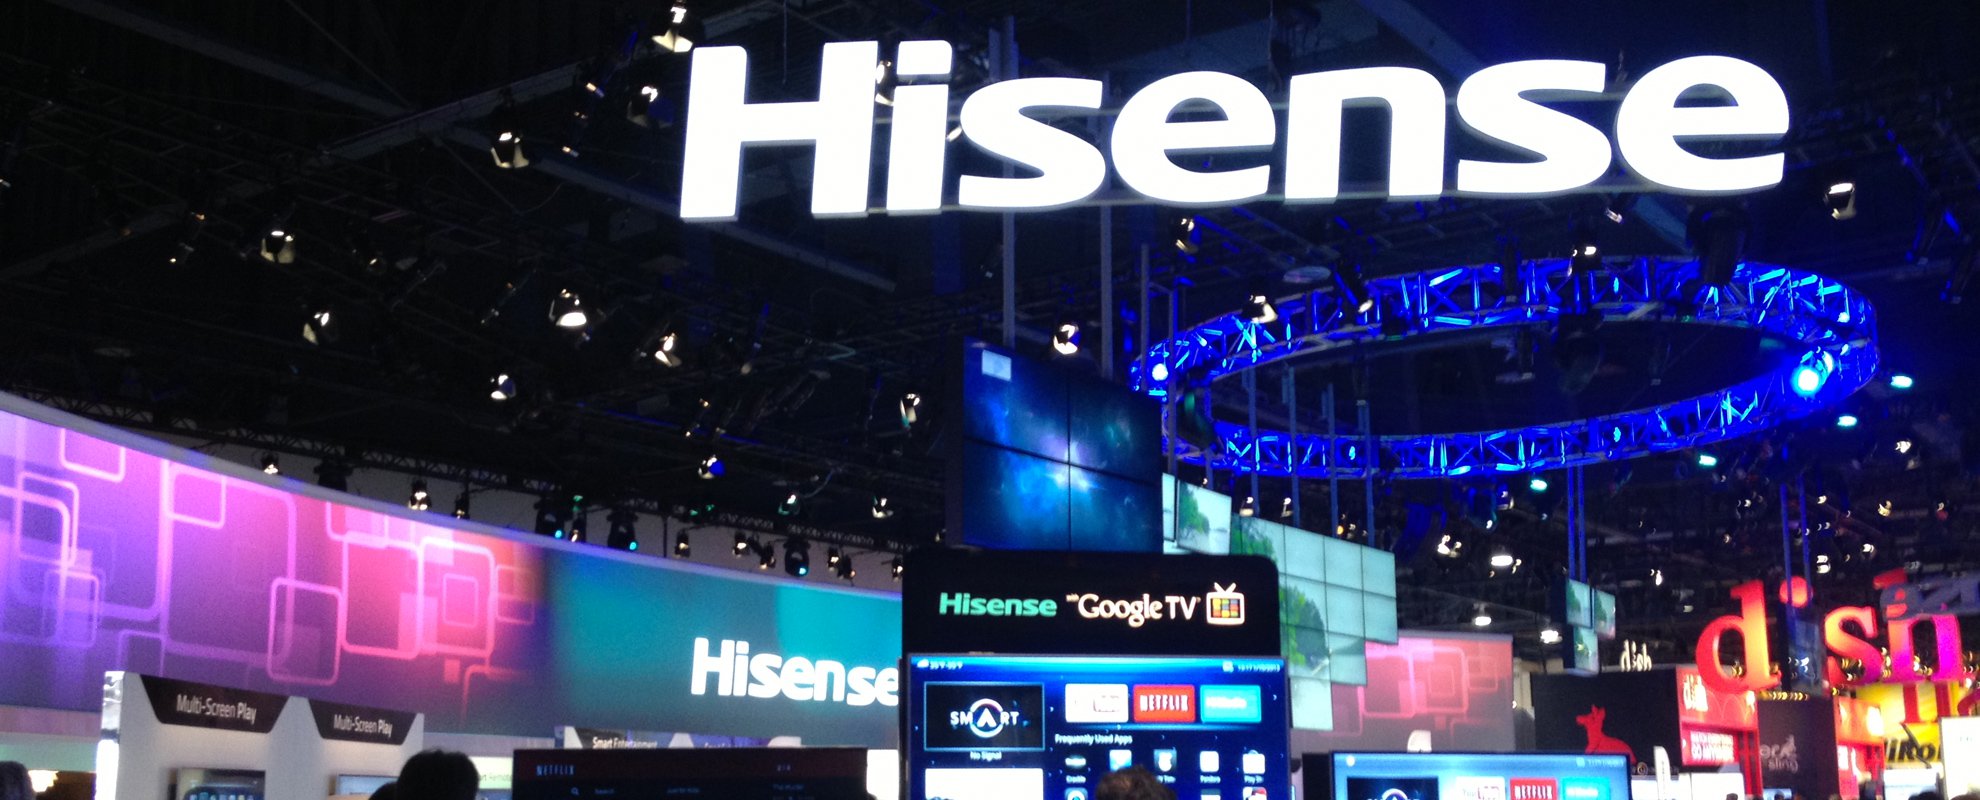 Hisense Group makes the Hisense Refrigerators now